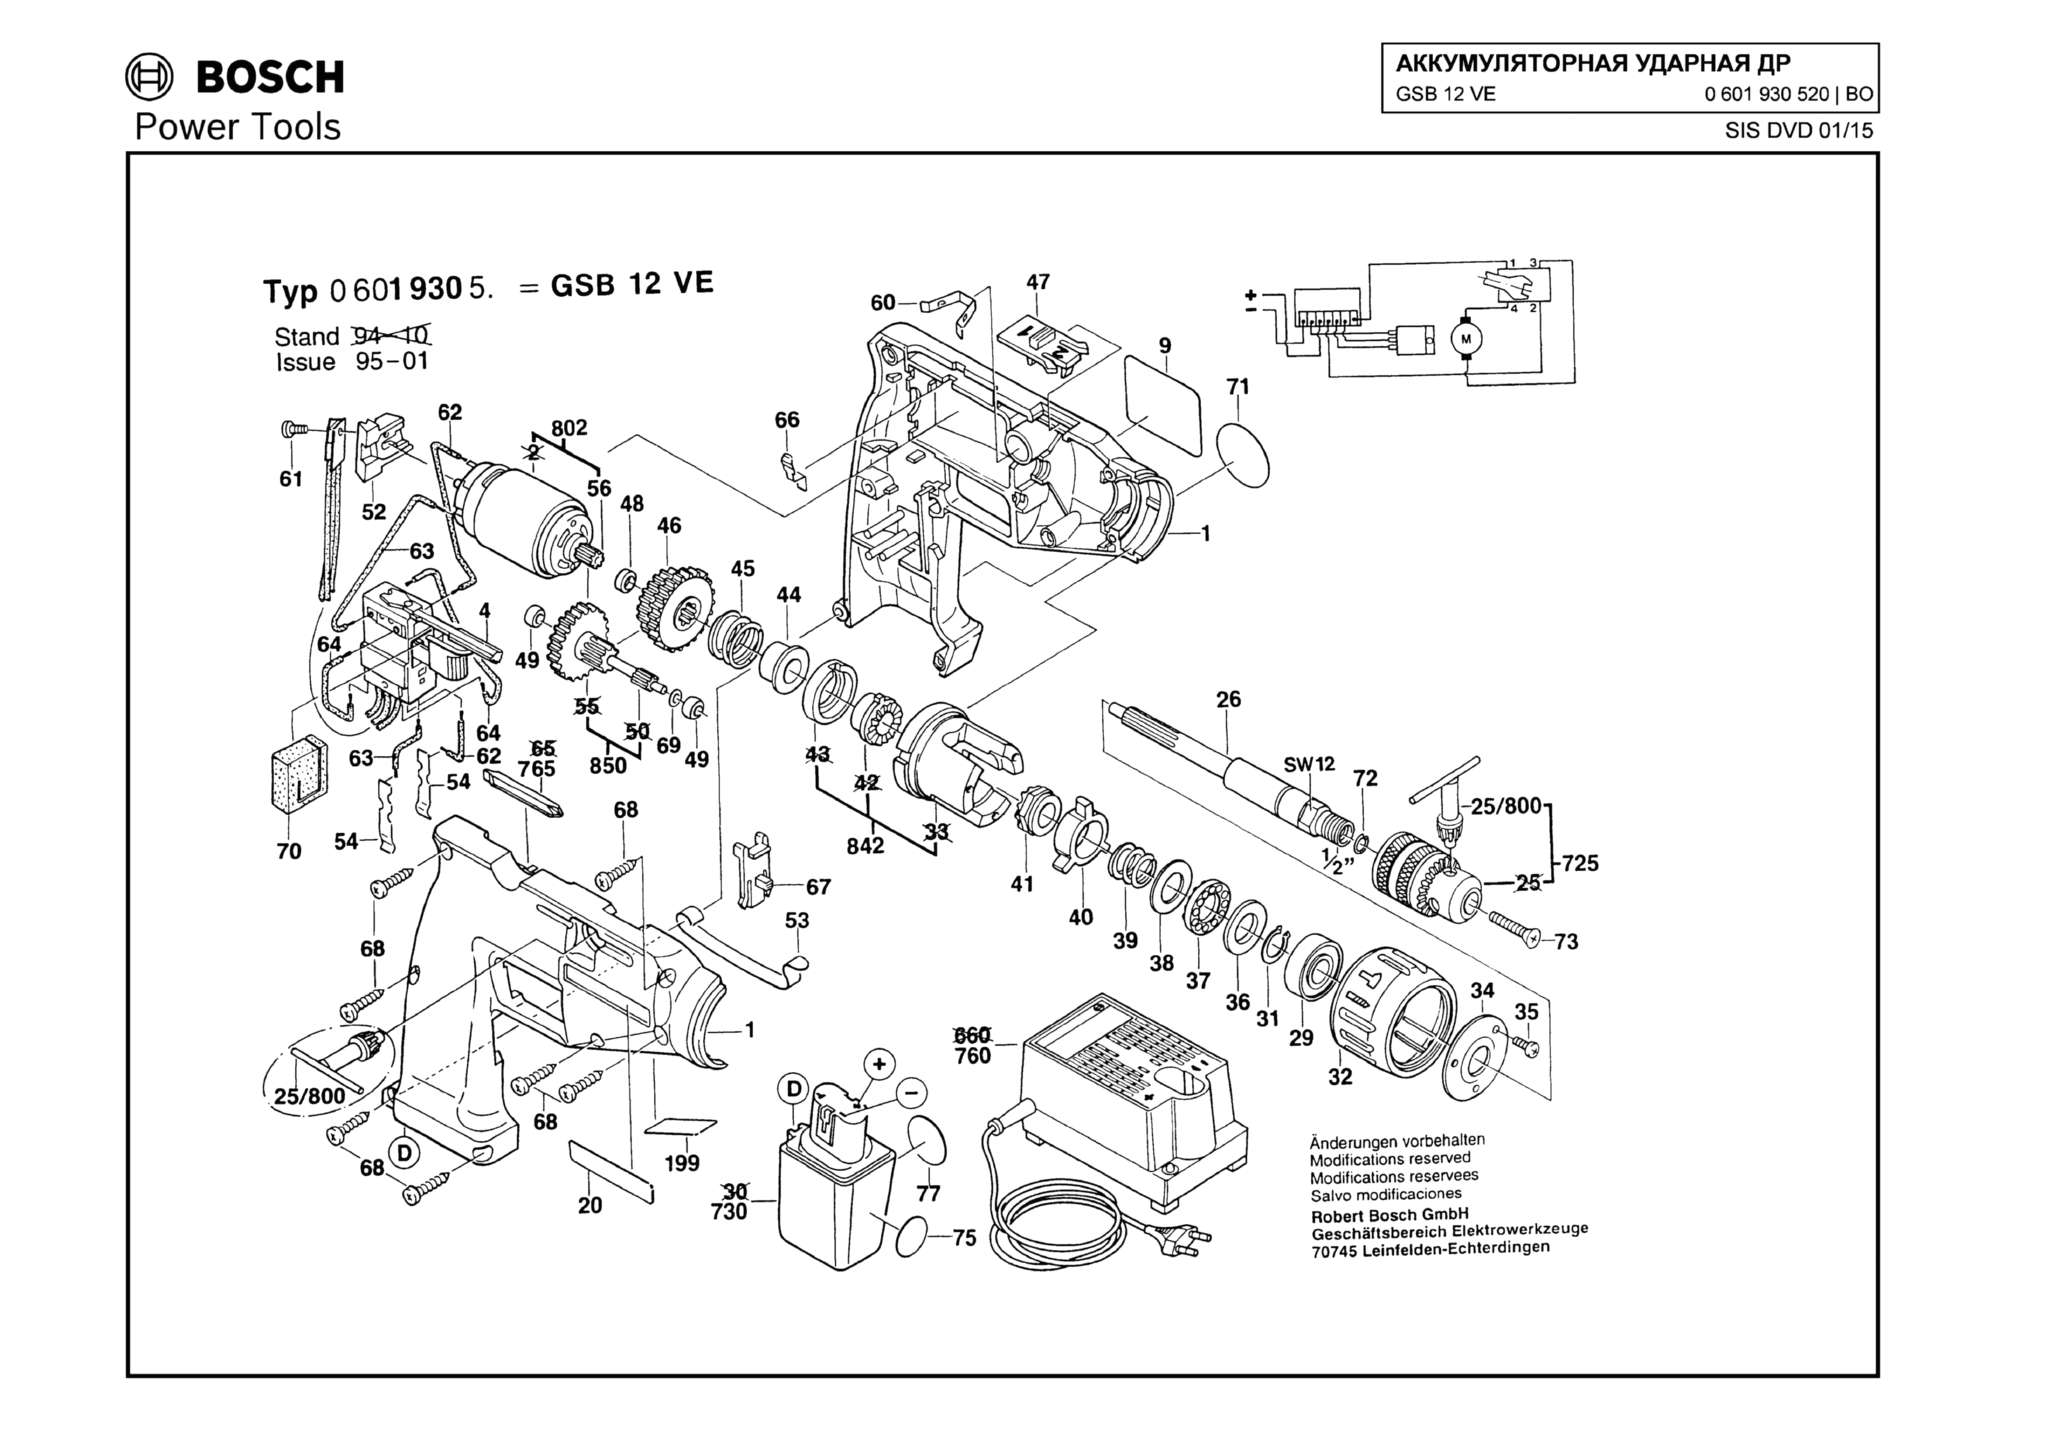 Запчасти, схема и деталировка Bosch GSB 12 VE (ТИП 0601930520)